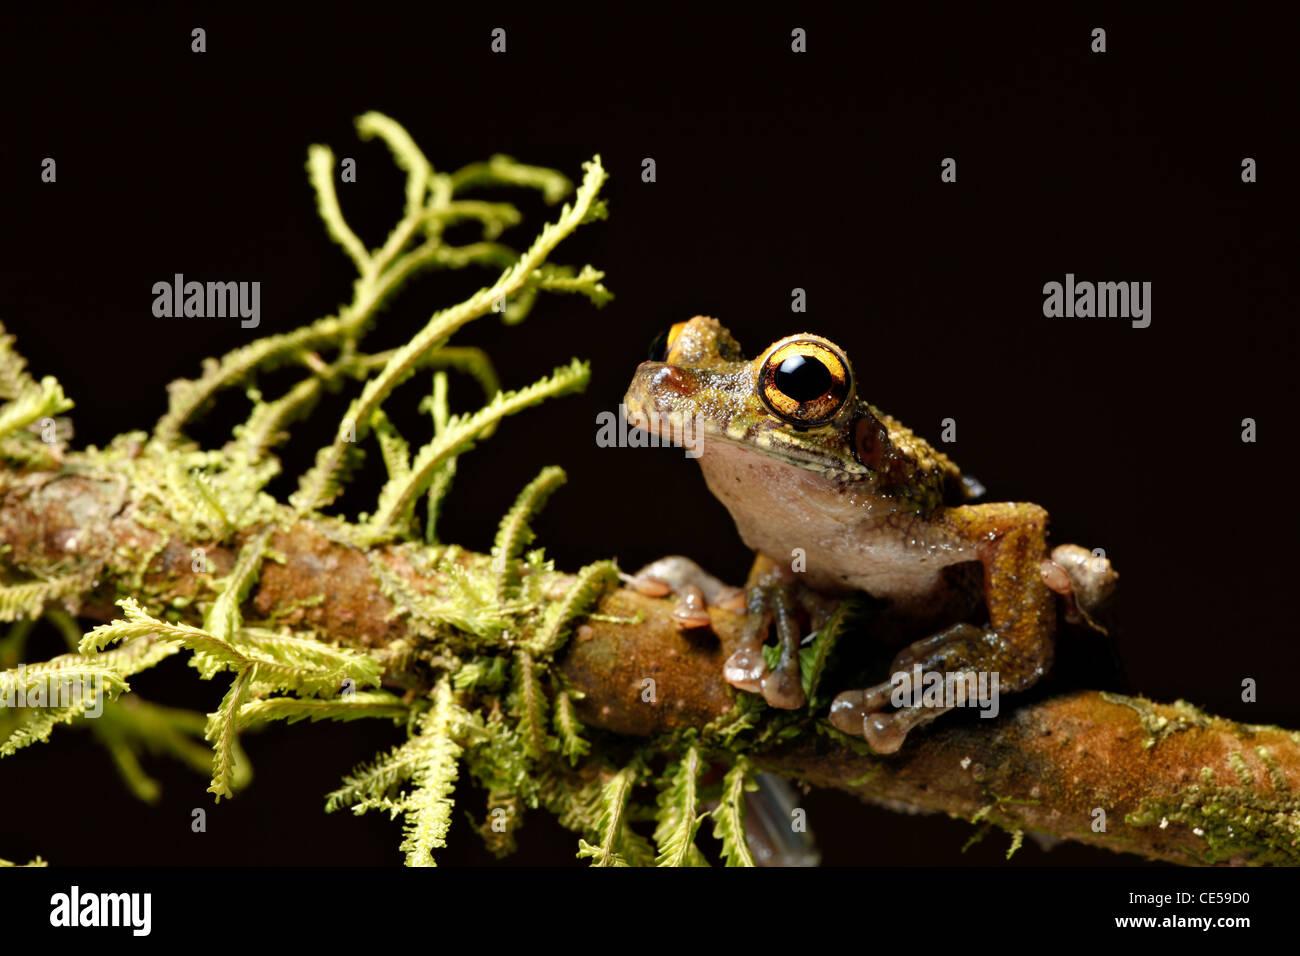 osteocephalus-leprieurii-tree-frog-in-the-amazon-rain-forest-sitting-CE59D0.jpg